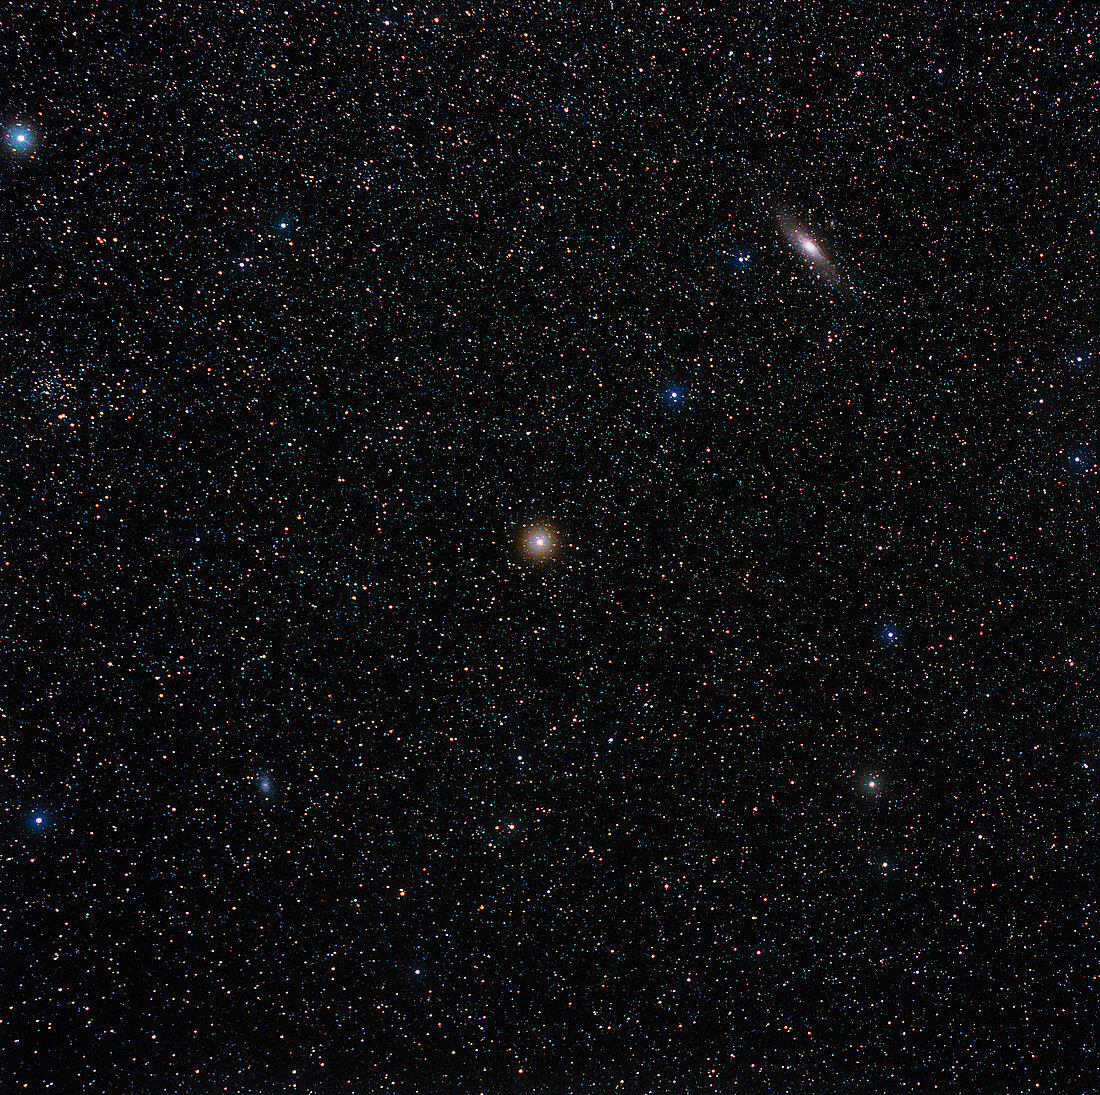 Andromeda starfield